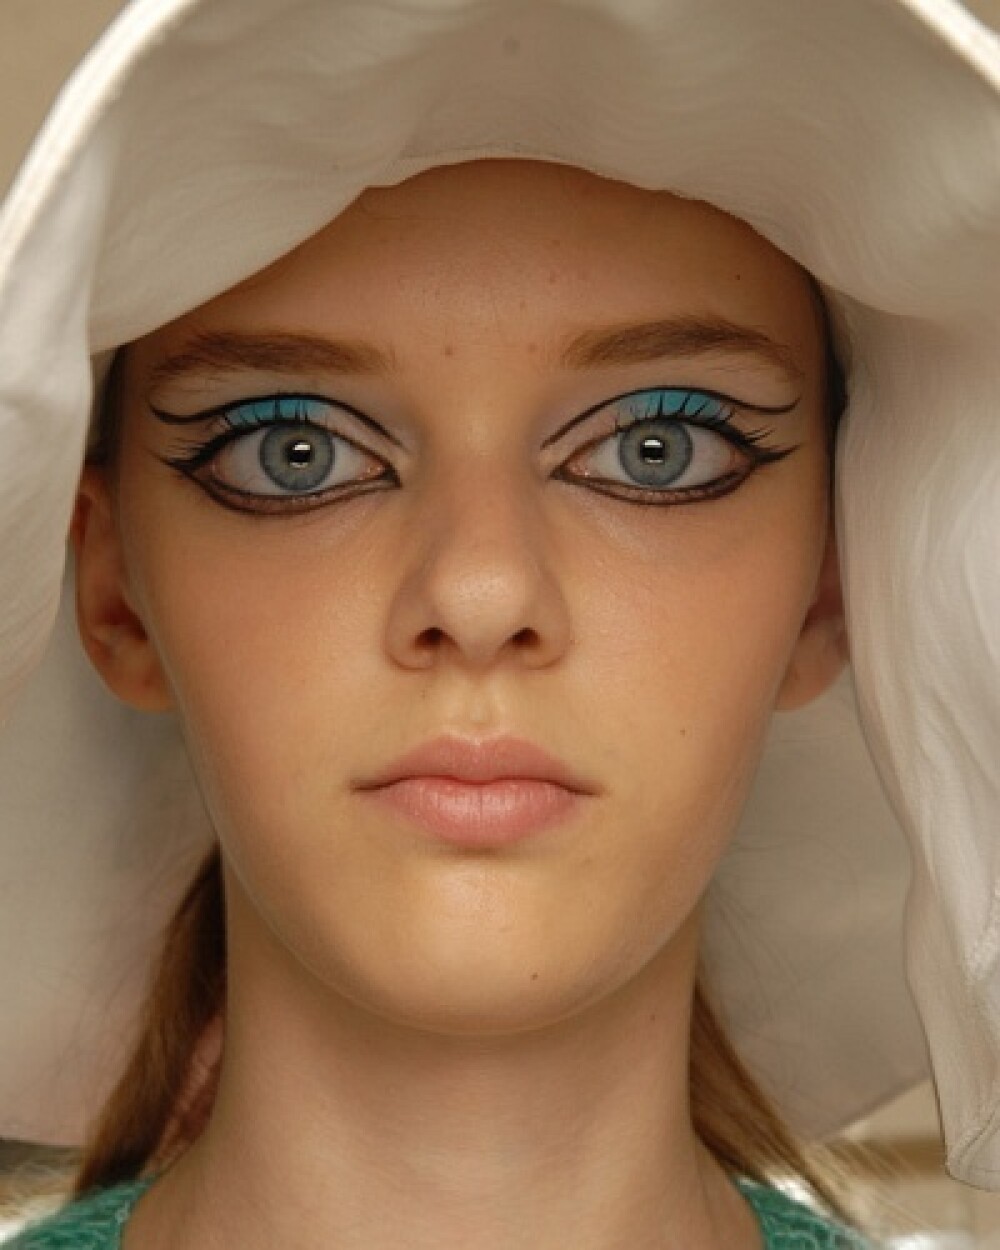 Masha Telnaya, modelul ucrainean care atrage privirile la toate prezentarile de moda. GALERIE FOTO - Imaginea 2